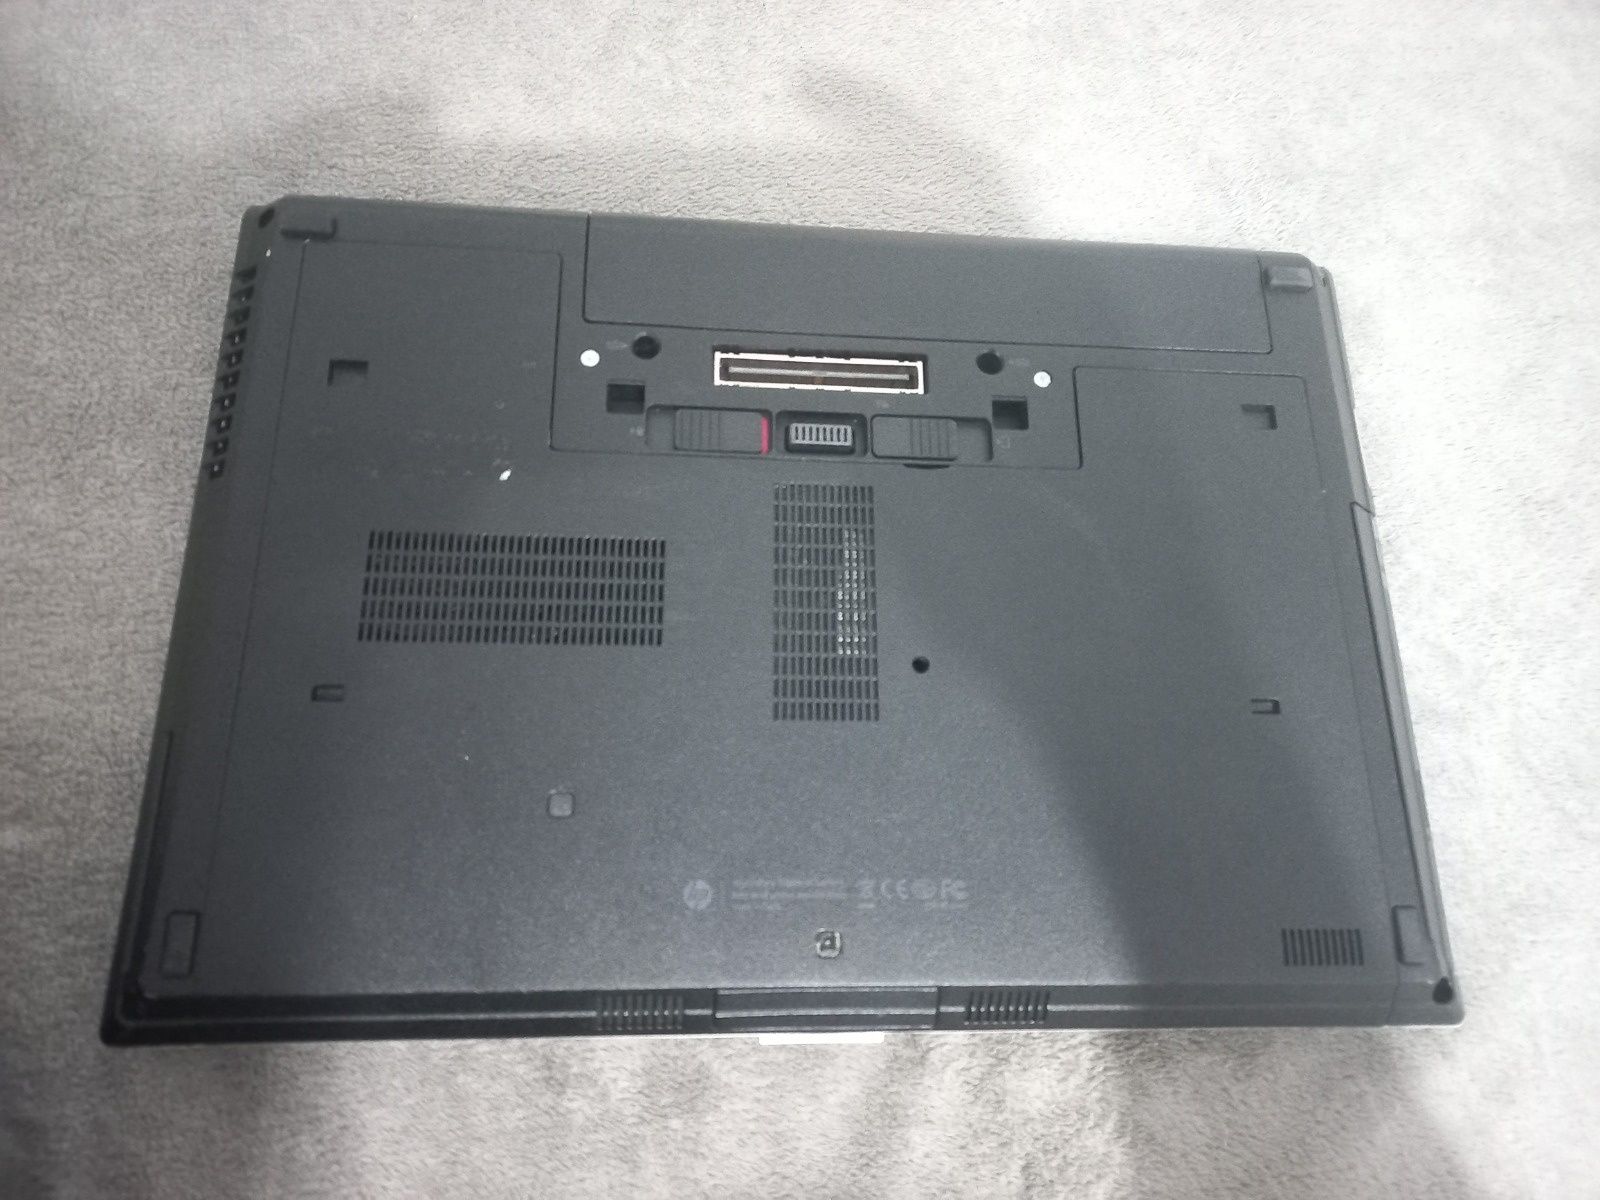 Laptop HP Elitebook 8470P